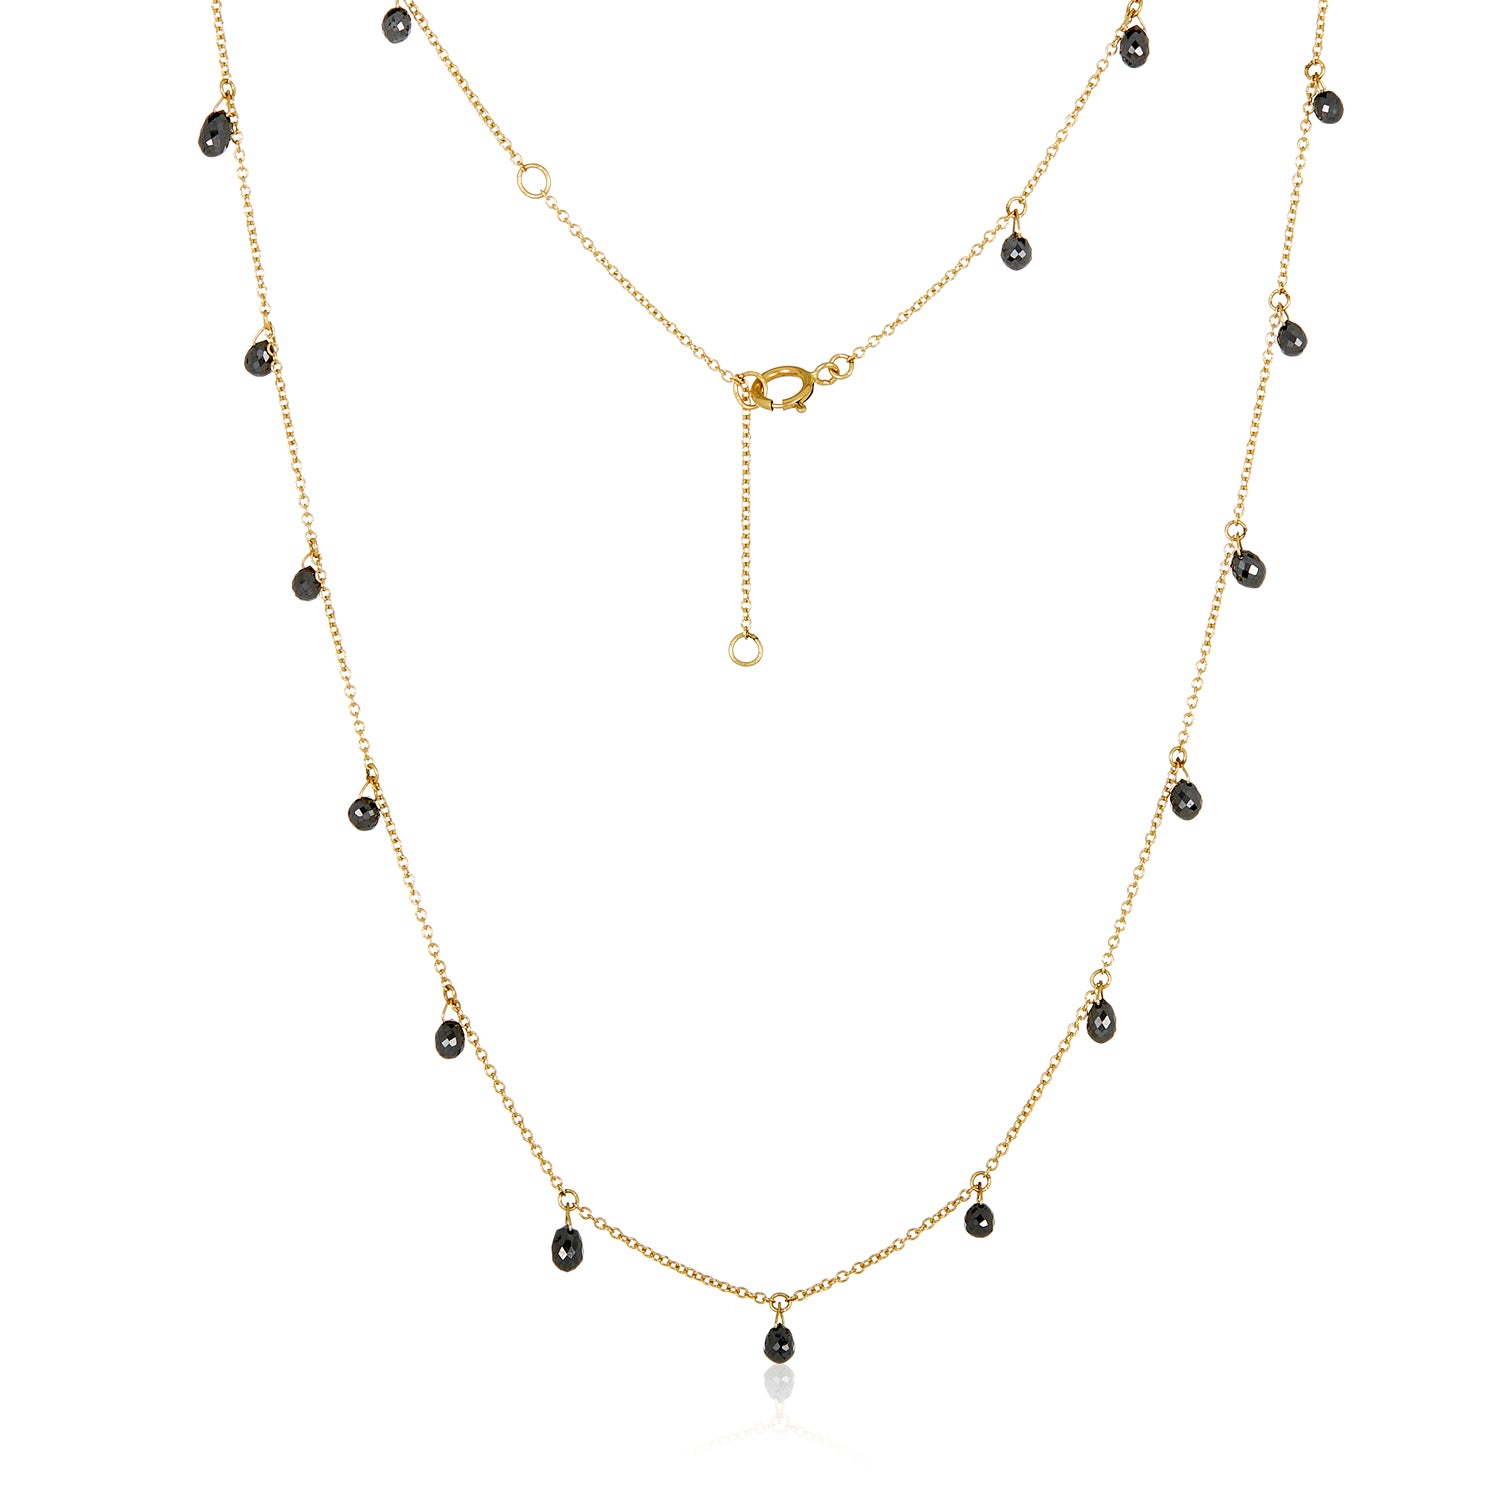 Black Diamond Dangle Section Necklace in 14k